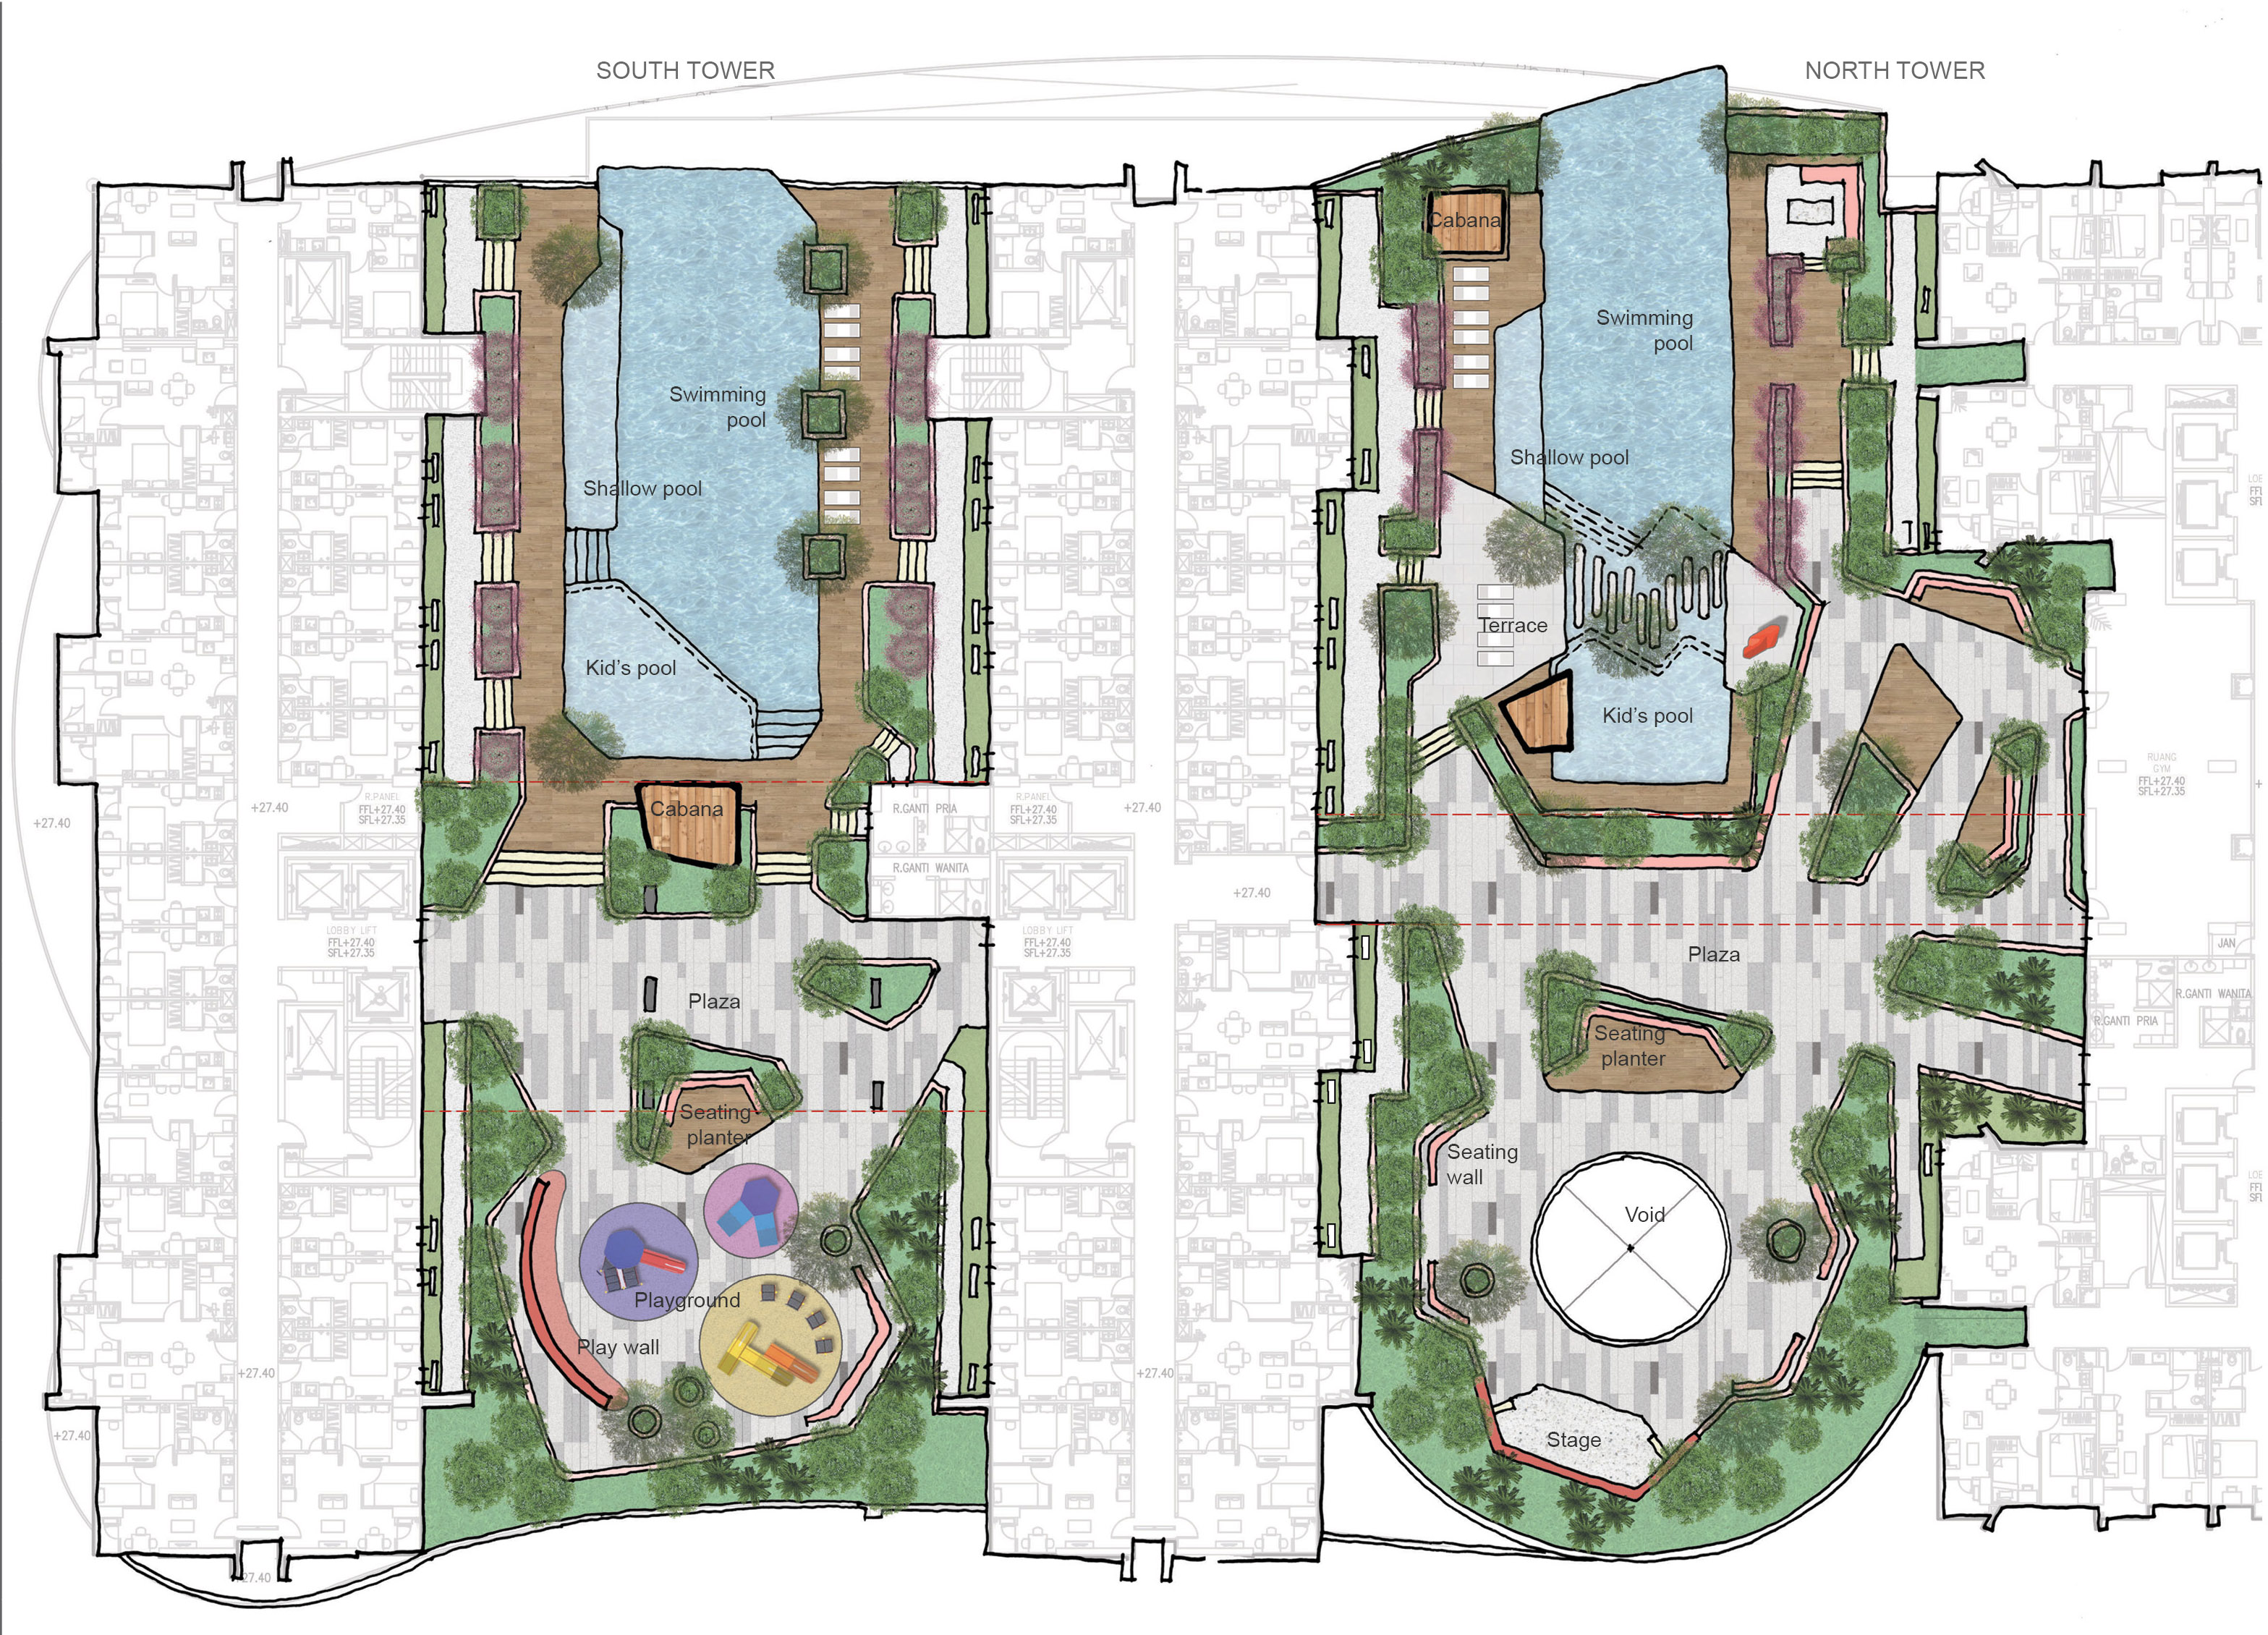 Landscape plan - Public facilities floor